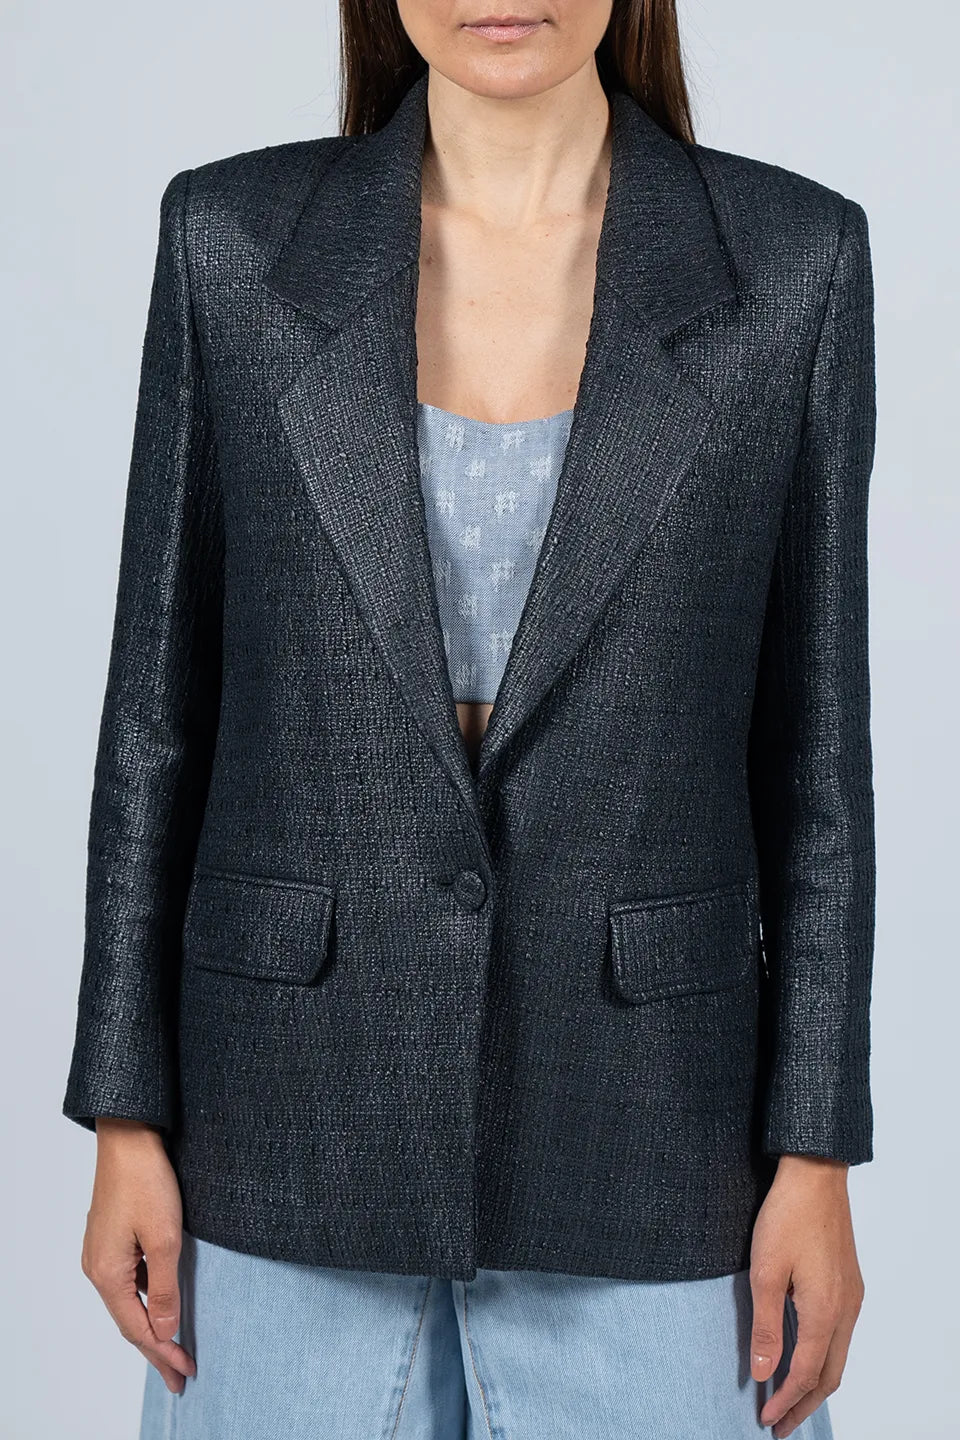 Shop online trendy Black Women blazers, Jacket from Federica Tosi Fashion designer. Product gallery 1